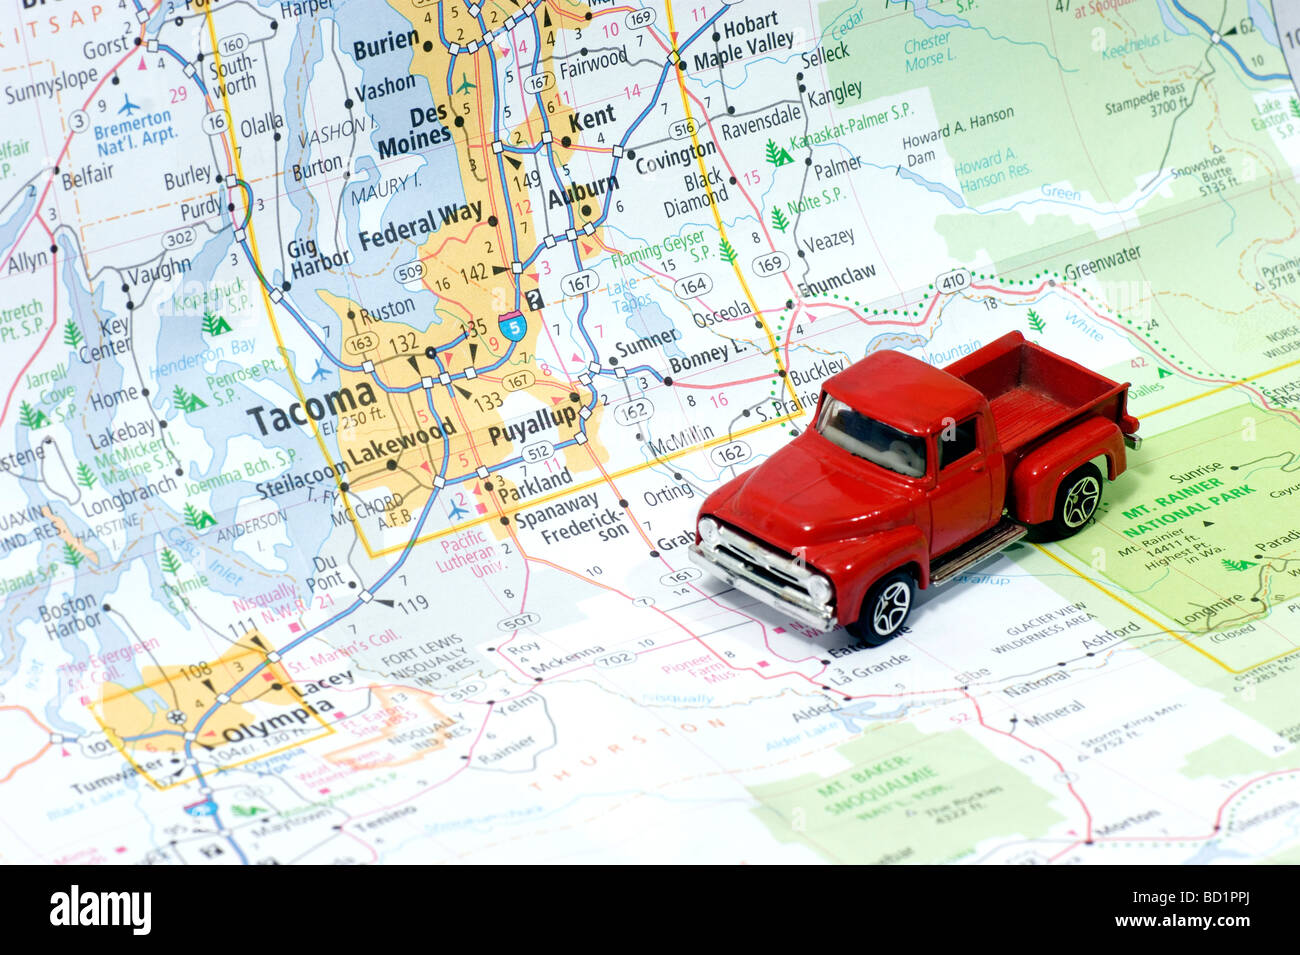 Automobile auf Straßenkarte oder Seattle Tacoma Washington USA Vereinigte Staaten von Amerika Stockfoto